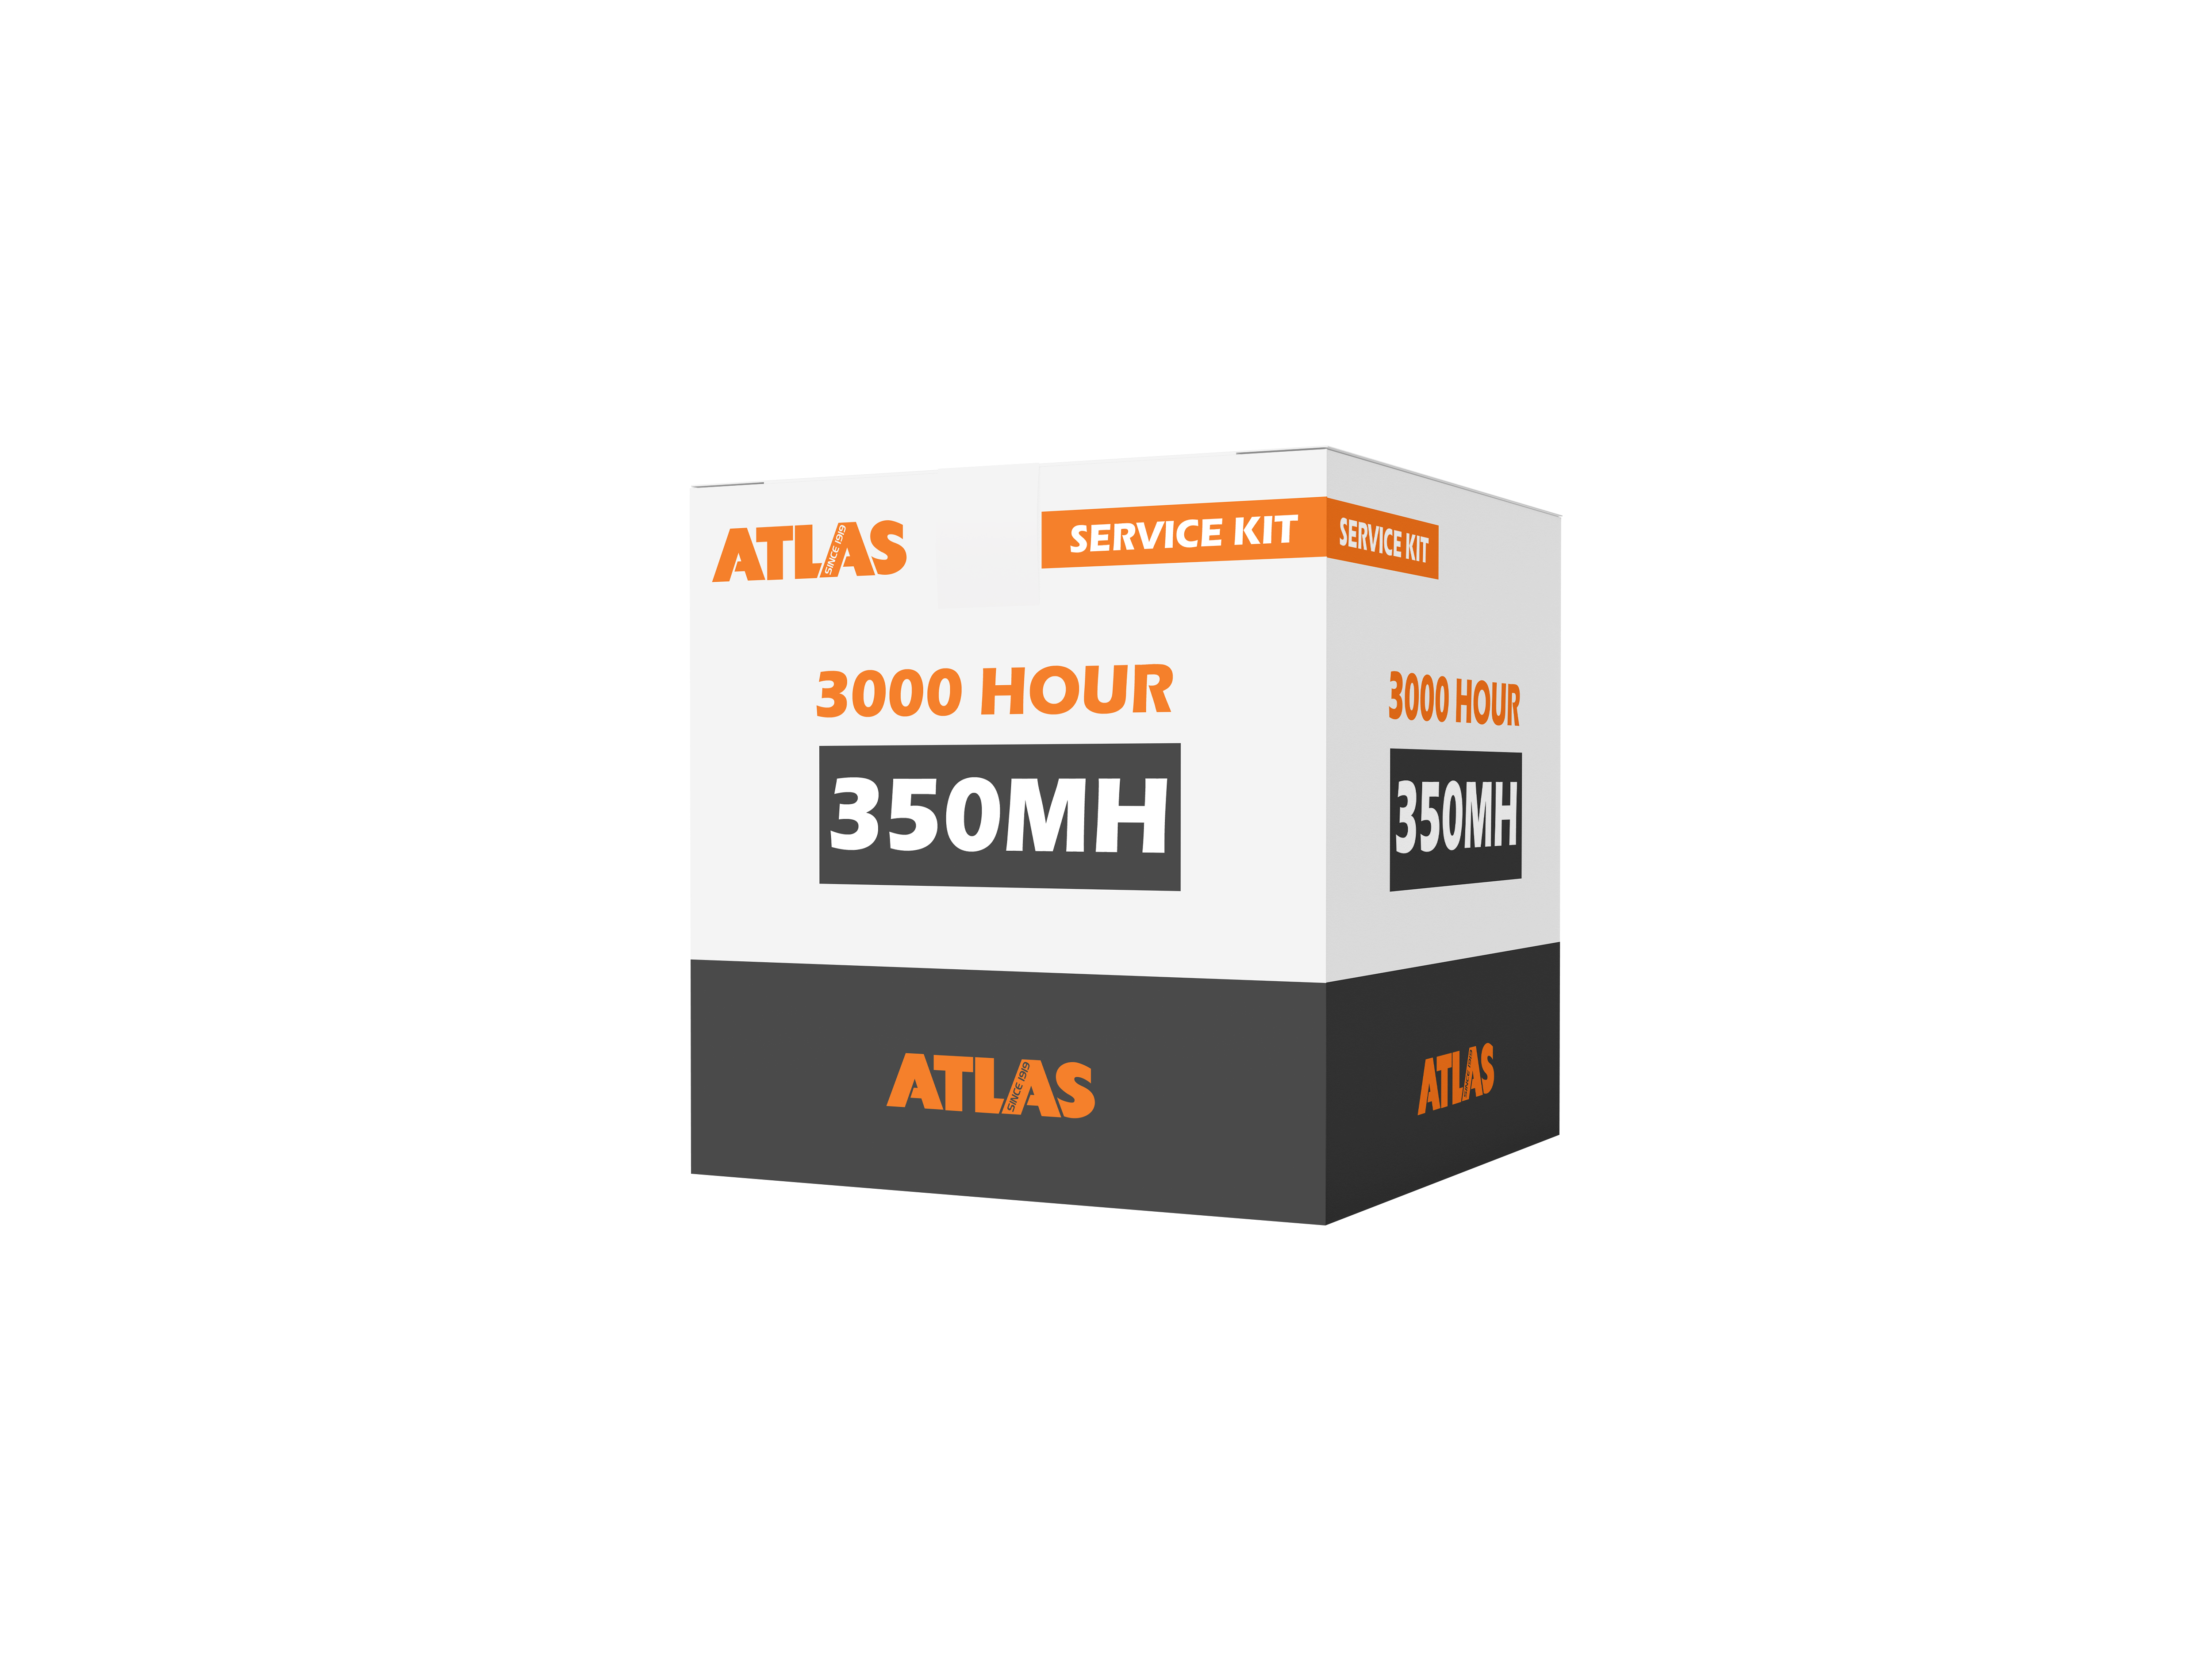 Atlas 350MH 3000 Hour Service Kit (350 series)